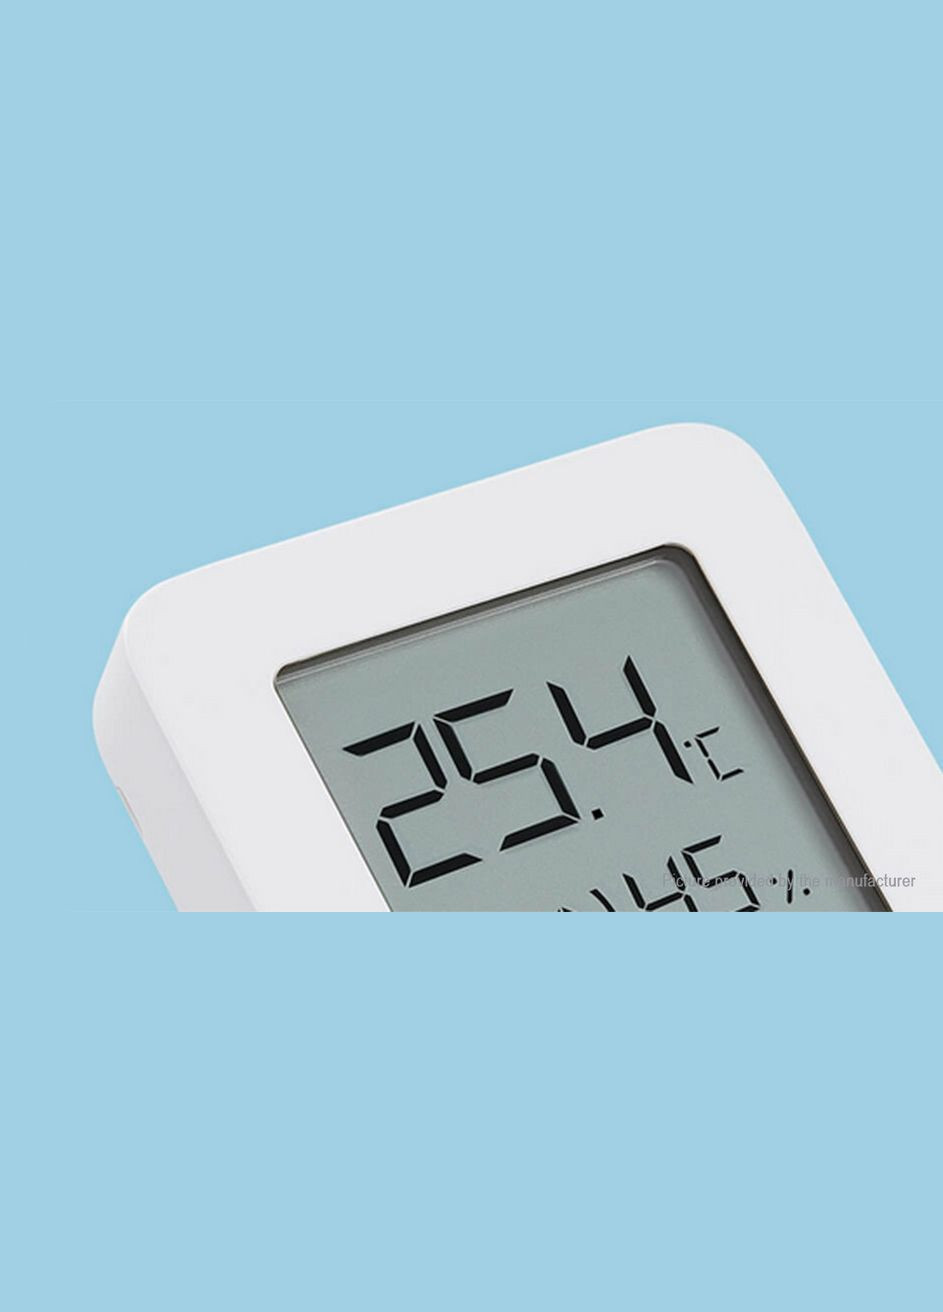 Термометр гігрометр Mijia Bluetooth Thermometer 2 LYWSD03MMC Xiaomi (279554779)